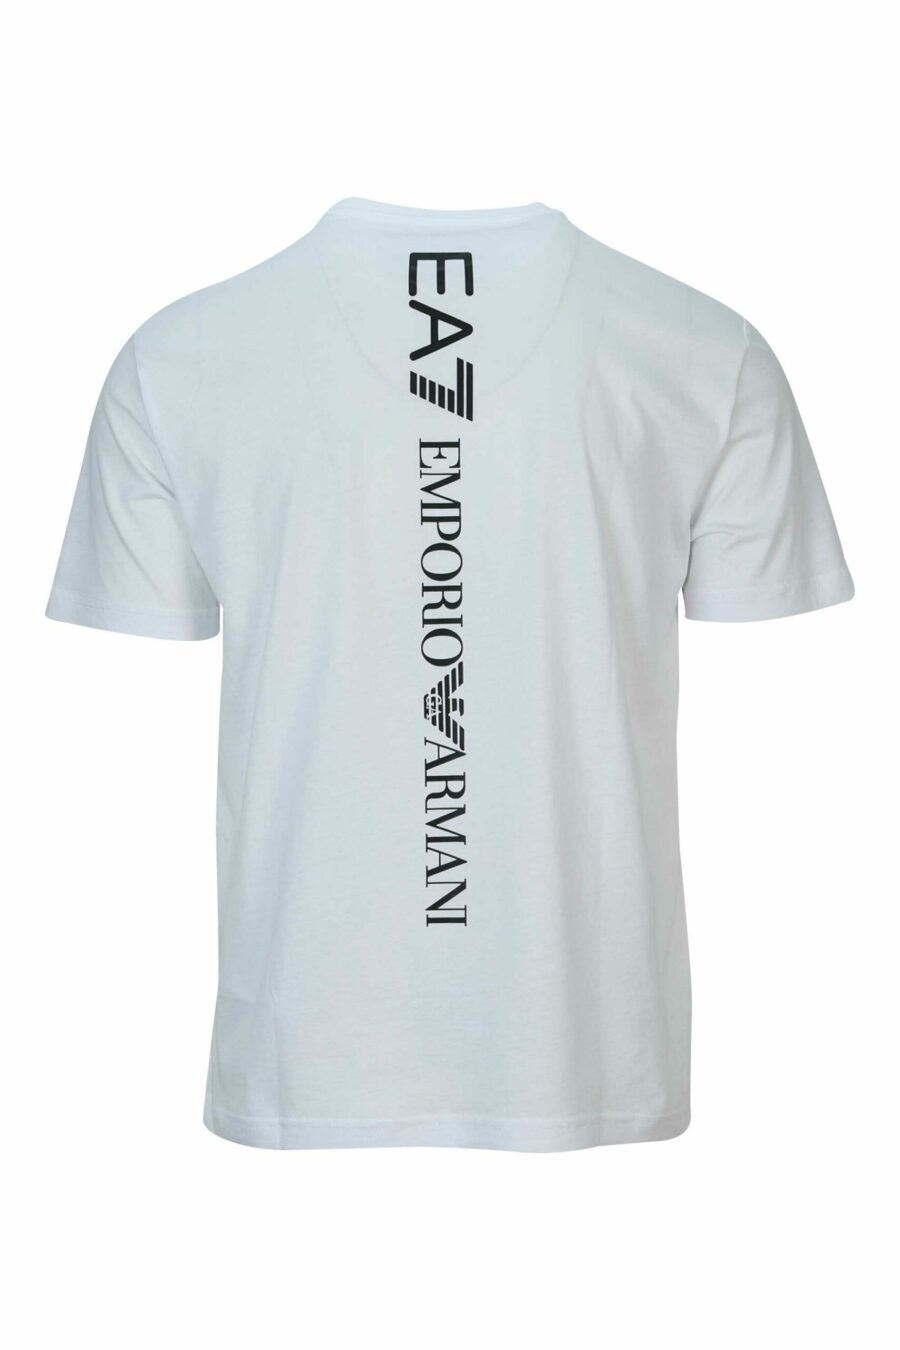 Camiseta blanca con maxilogo "lux identity" vertical detrás - 8058947452569 1 scaled